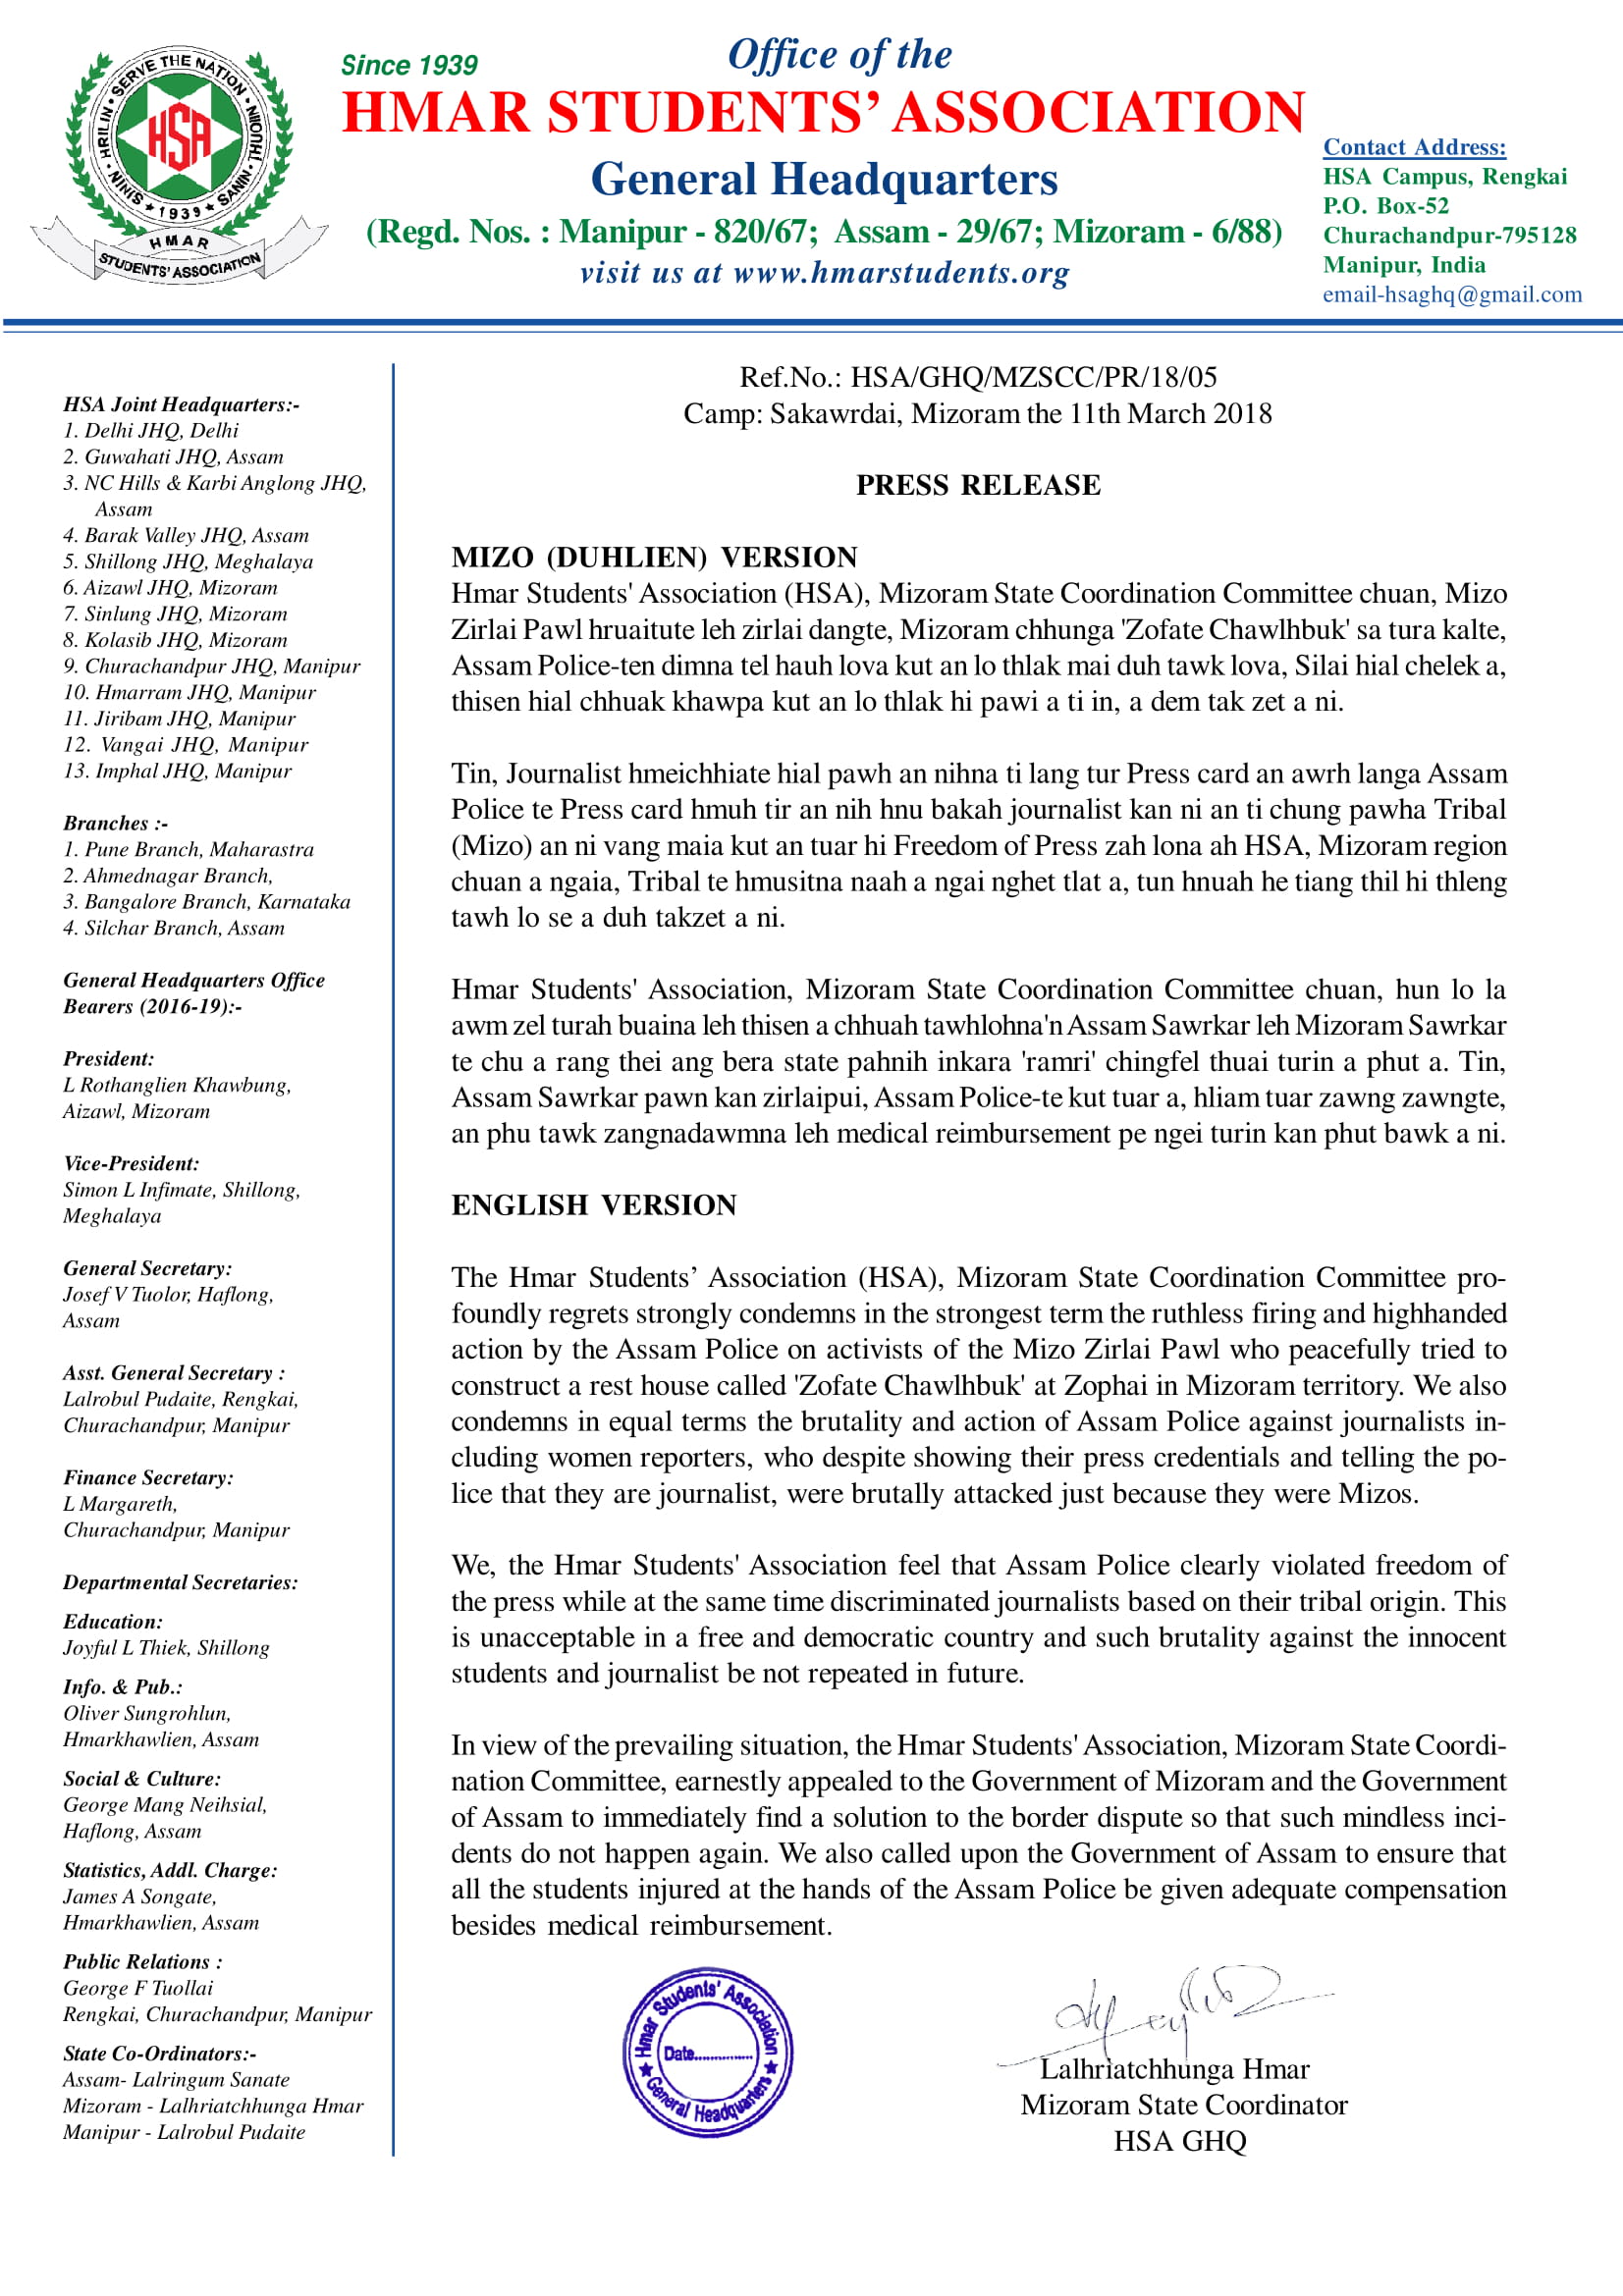 HSA Press Release on Bairabi Incident